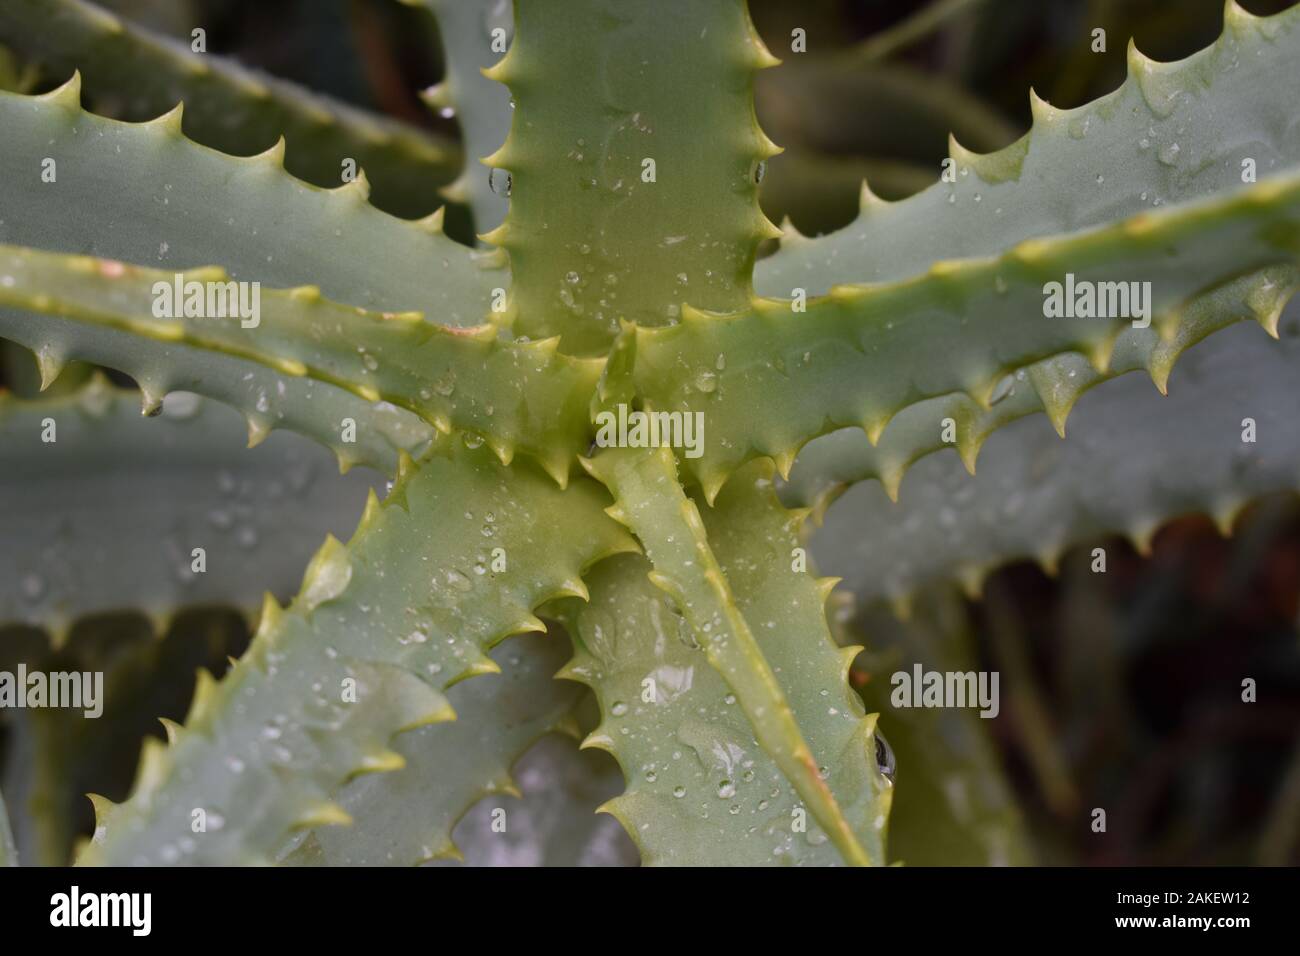 Wet Aloe Vera Plant from the Top Stock Photo